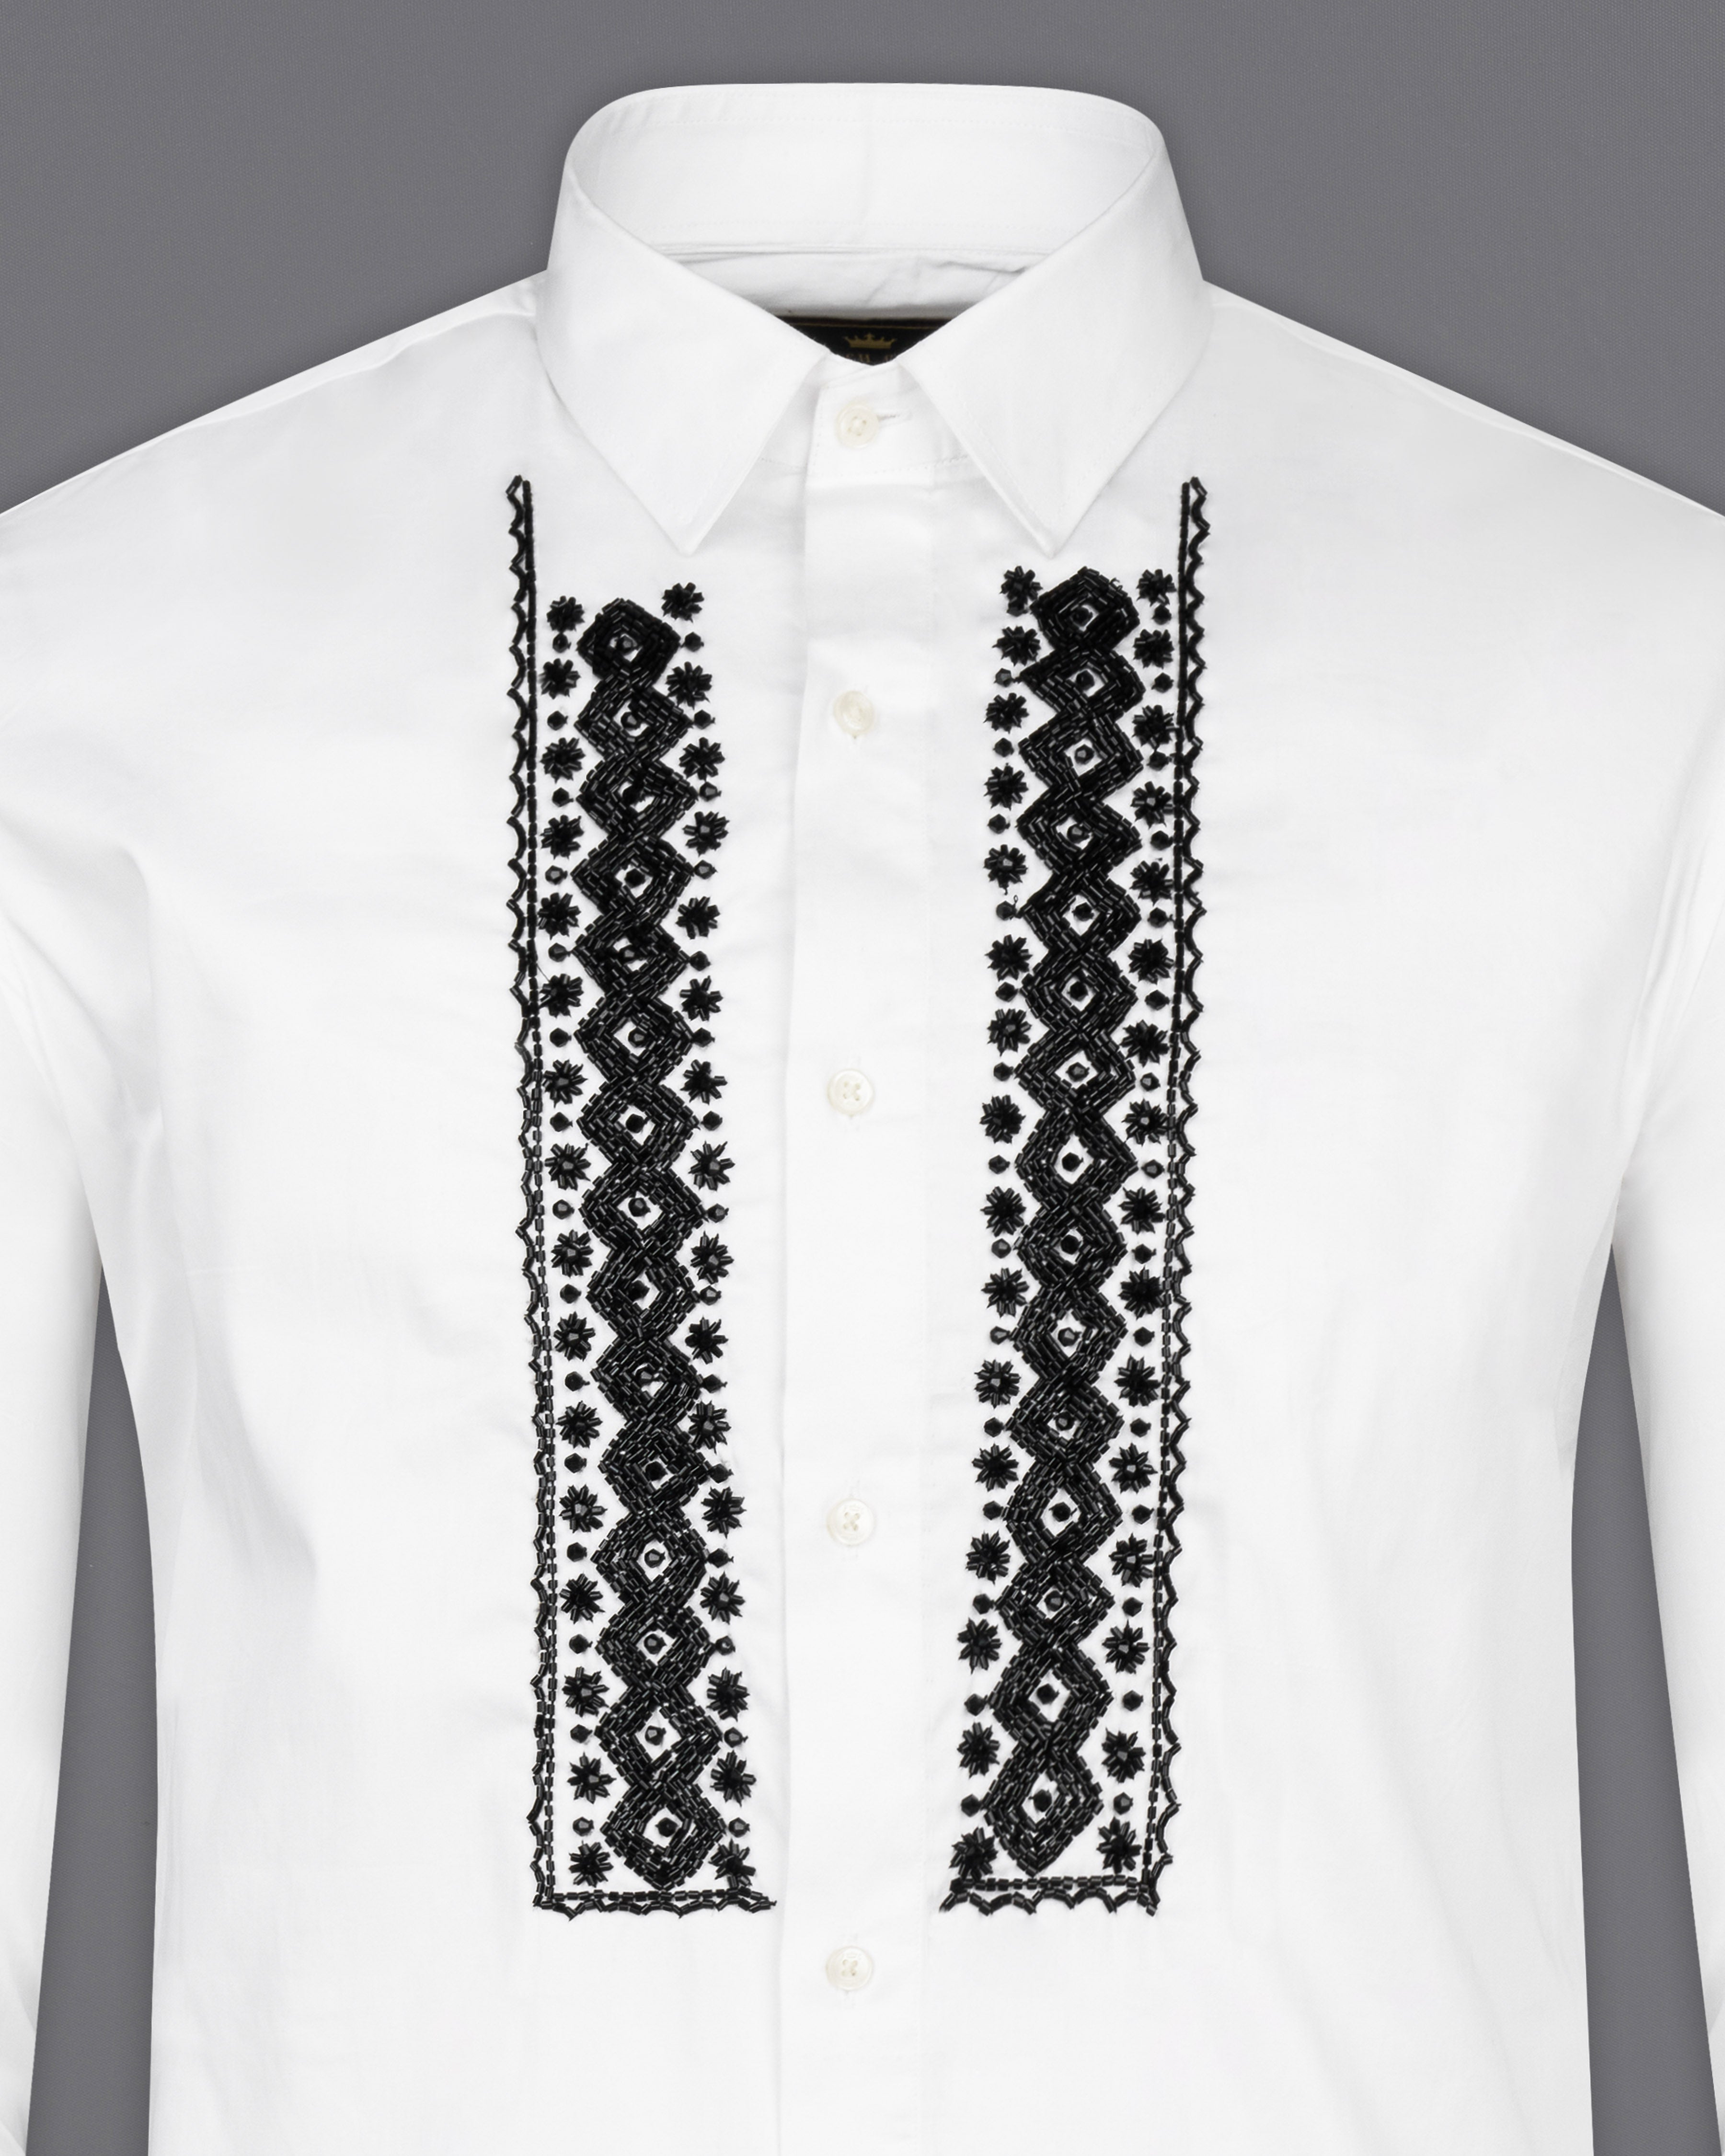 Bright White With Artisanal Aari Embroidery Super Soft Premium Cotton Designer Shirt 9800-E092-38, 9800-E092-H-38, 9800-E092-39, 9800-E092-H-39, 9800-E092-40, 9800-E092-H-40, 9800-E092-42, 9800-E092-H-42, 9800-E092-44, 9800-E092-H-44, 9800-E092-46, 9800-E092-H-46, 9800-E092-48, 9800-E092-H-48, 9800-E092-50, 9800-E092-H-50, 9800-E092-52, 9800-E092-H-52